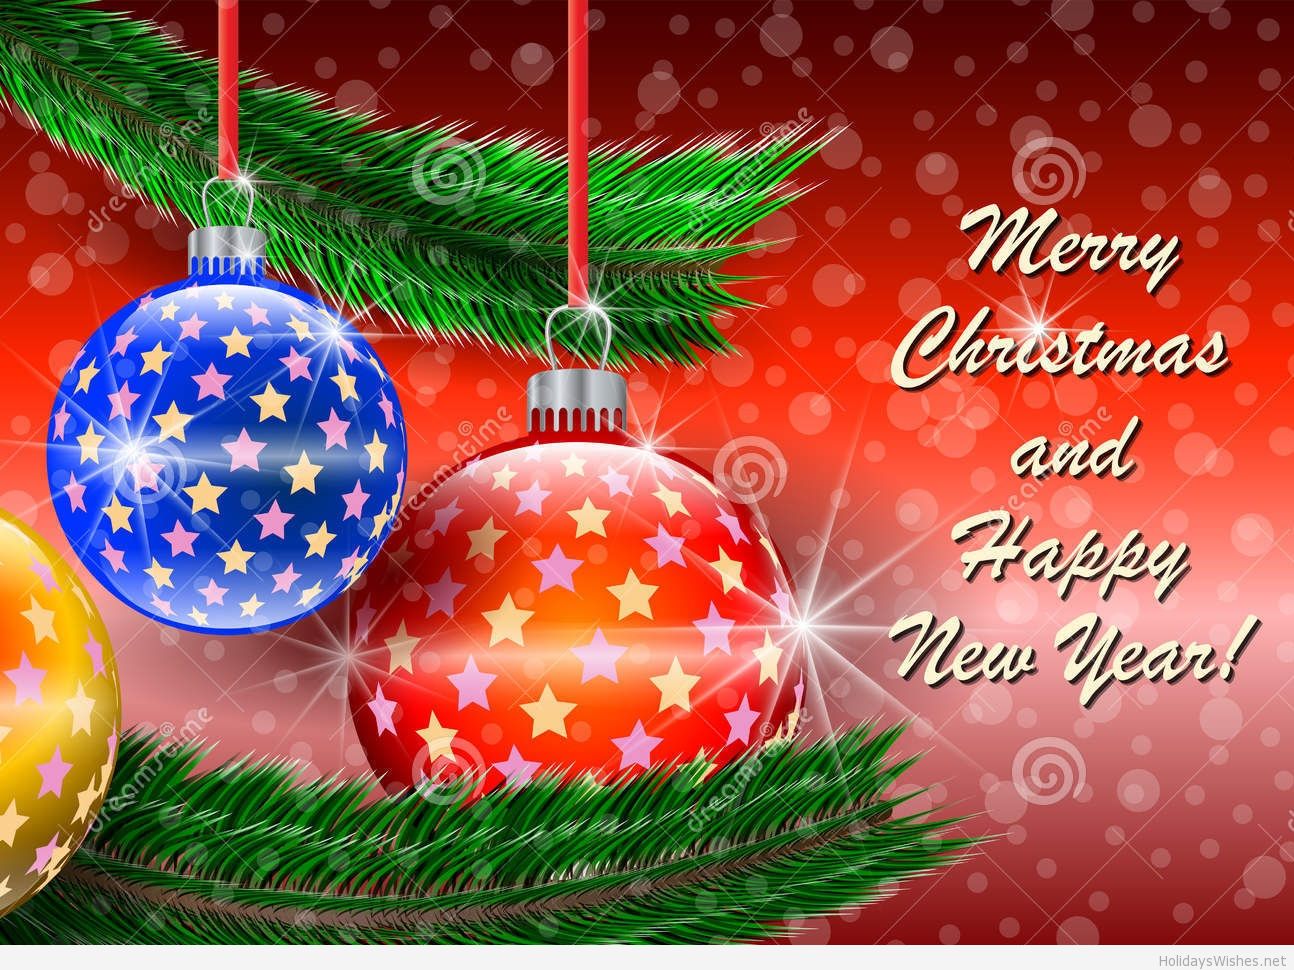 Amazing-merry-Christmas-and-Happy-new-year-2014-2015.jpg